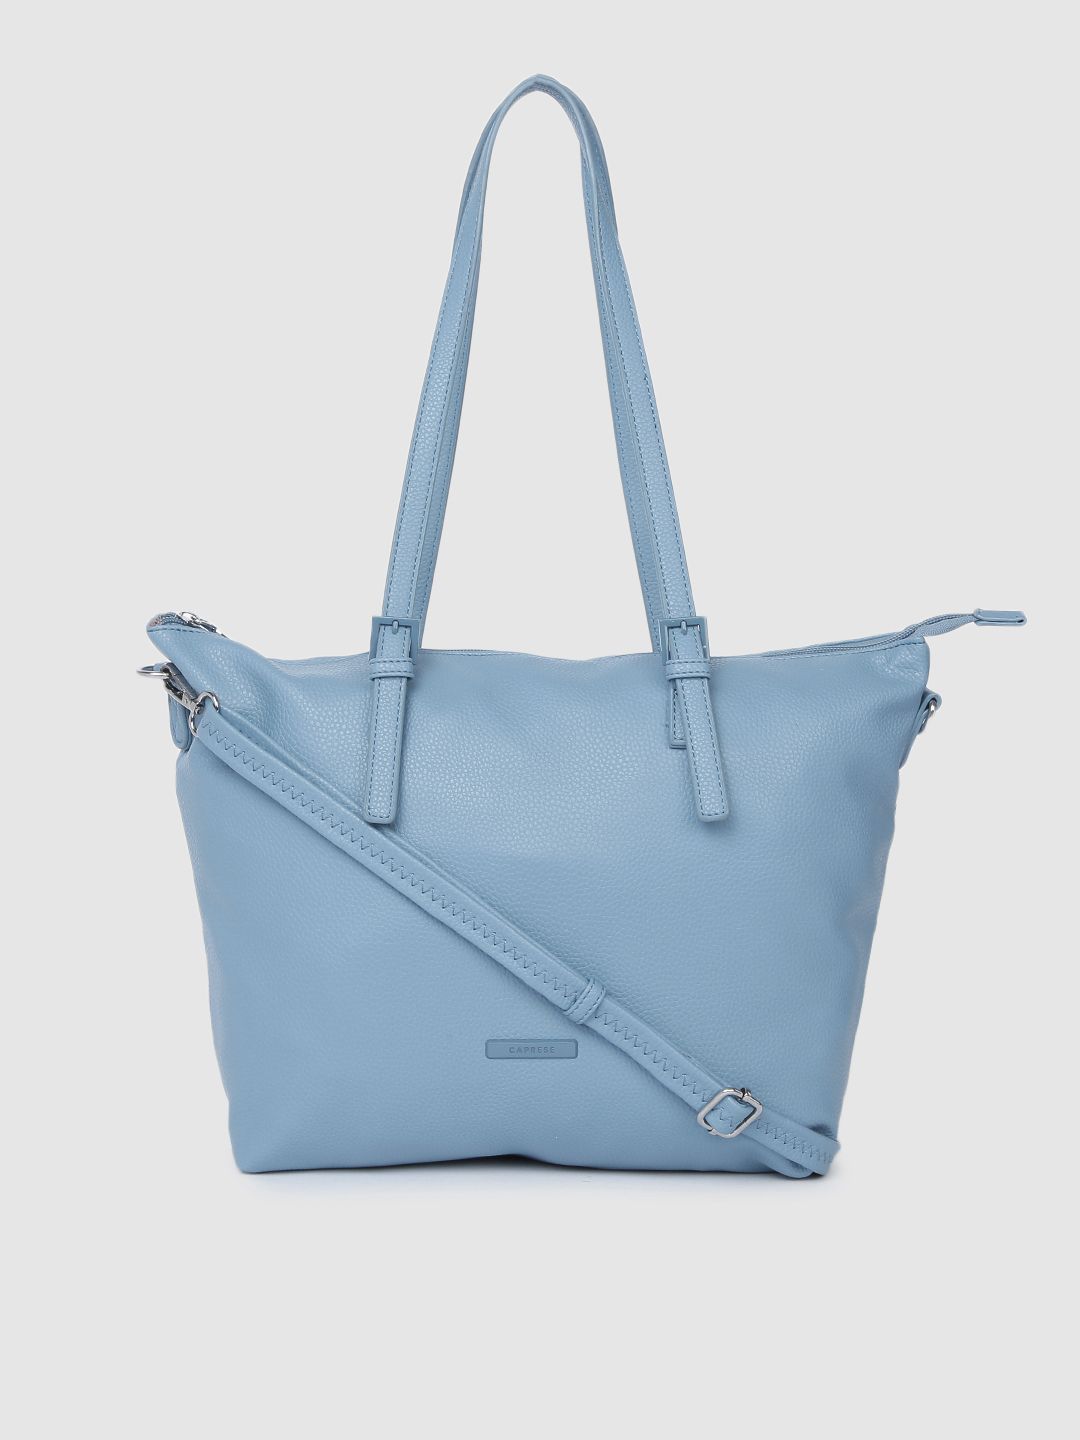 Caprese Women Blue Solid Shoulder Bag Price in India